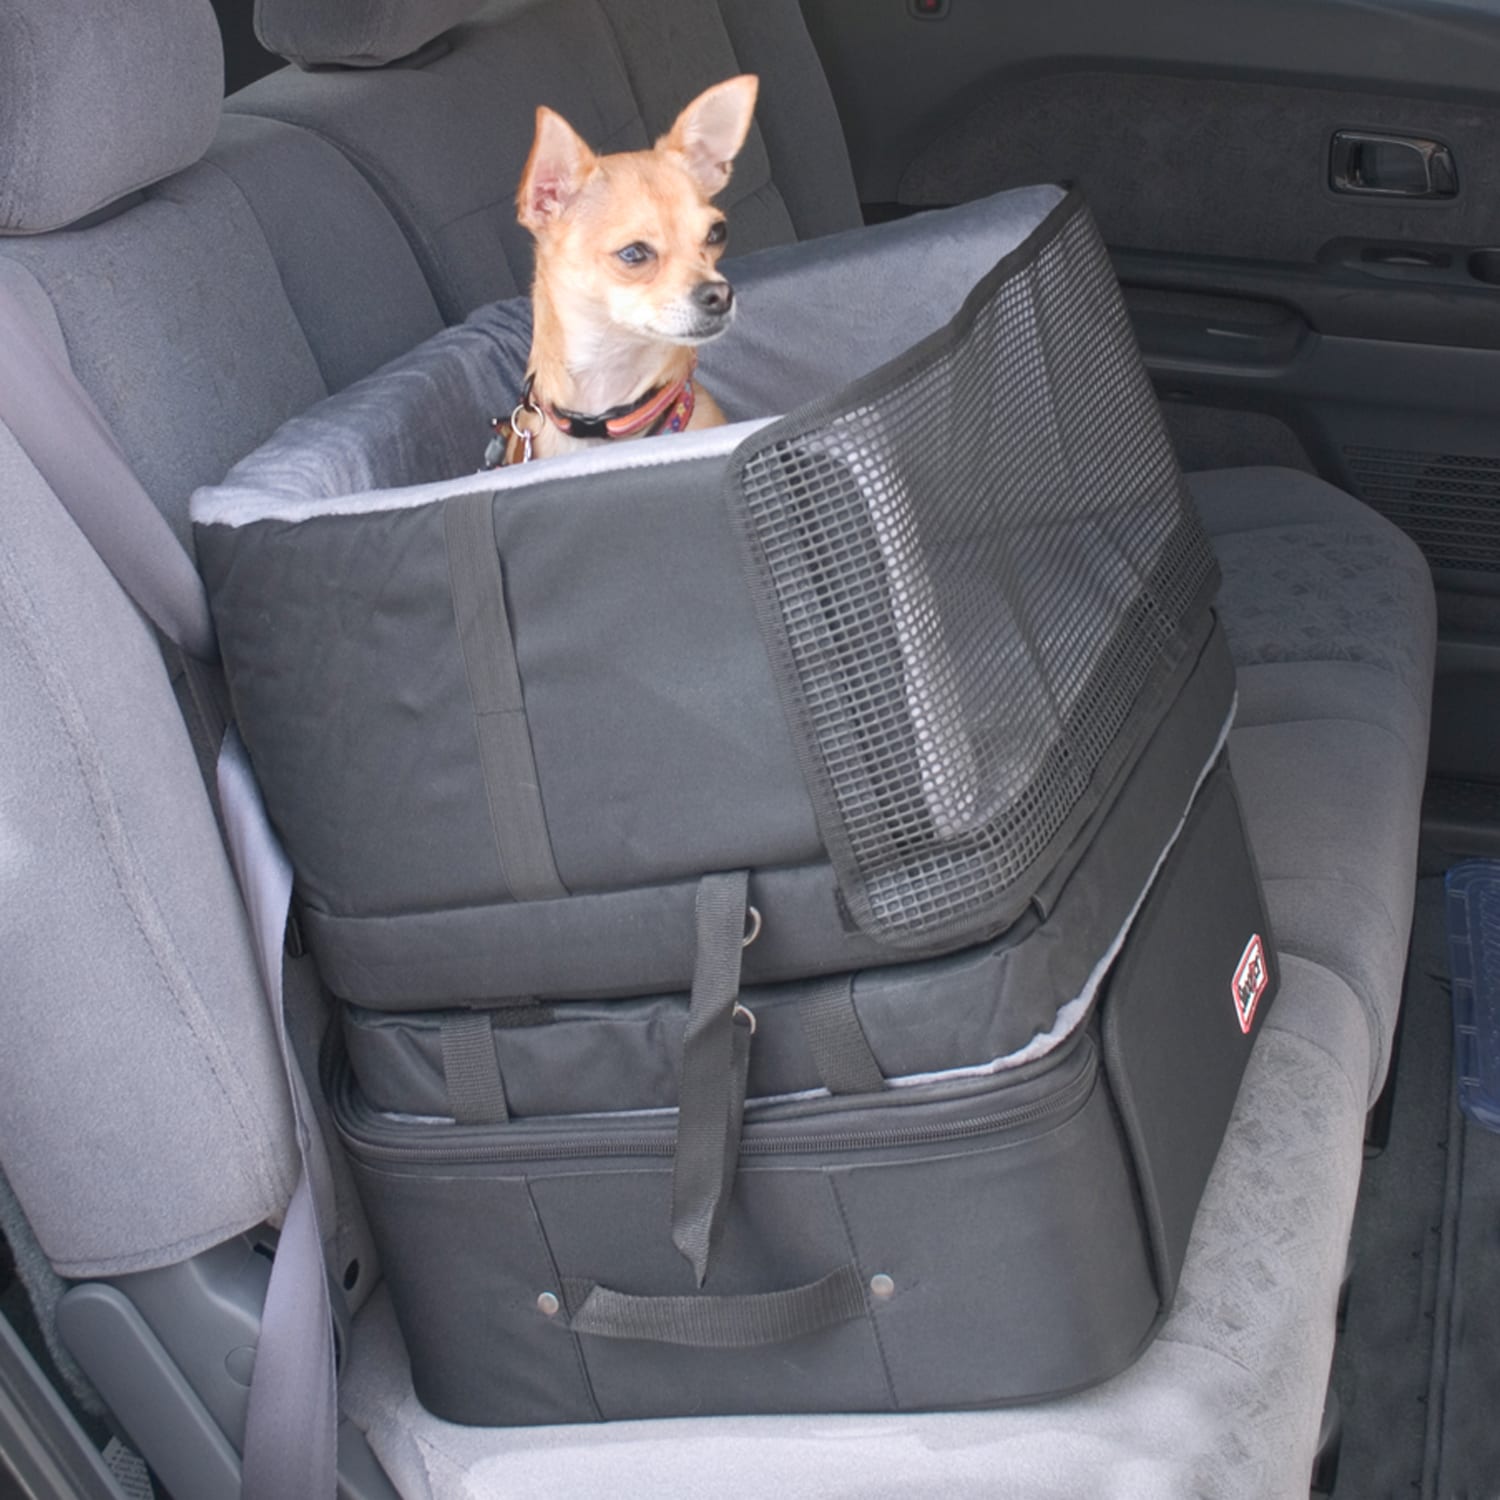 Snoozer 3 in 1 Pet Car Seat